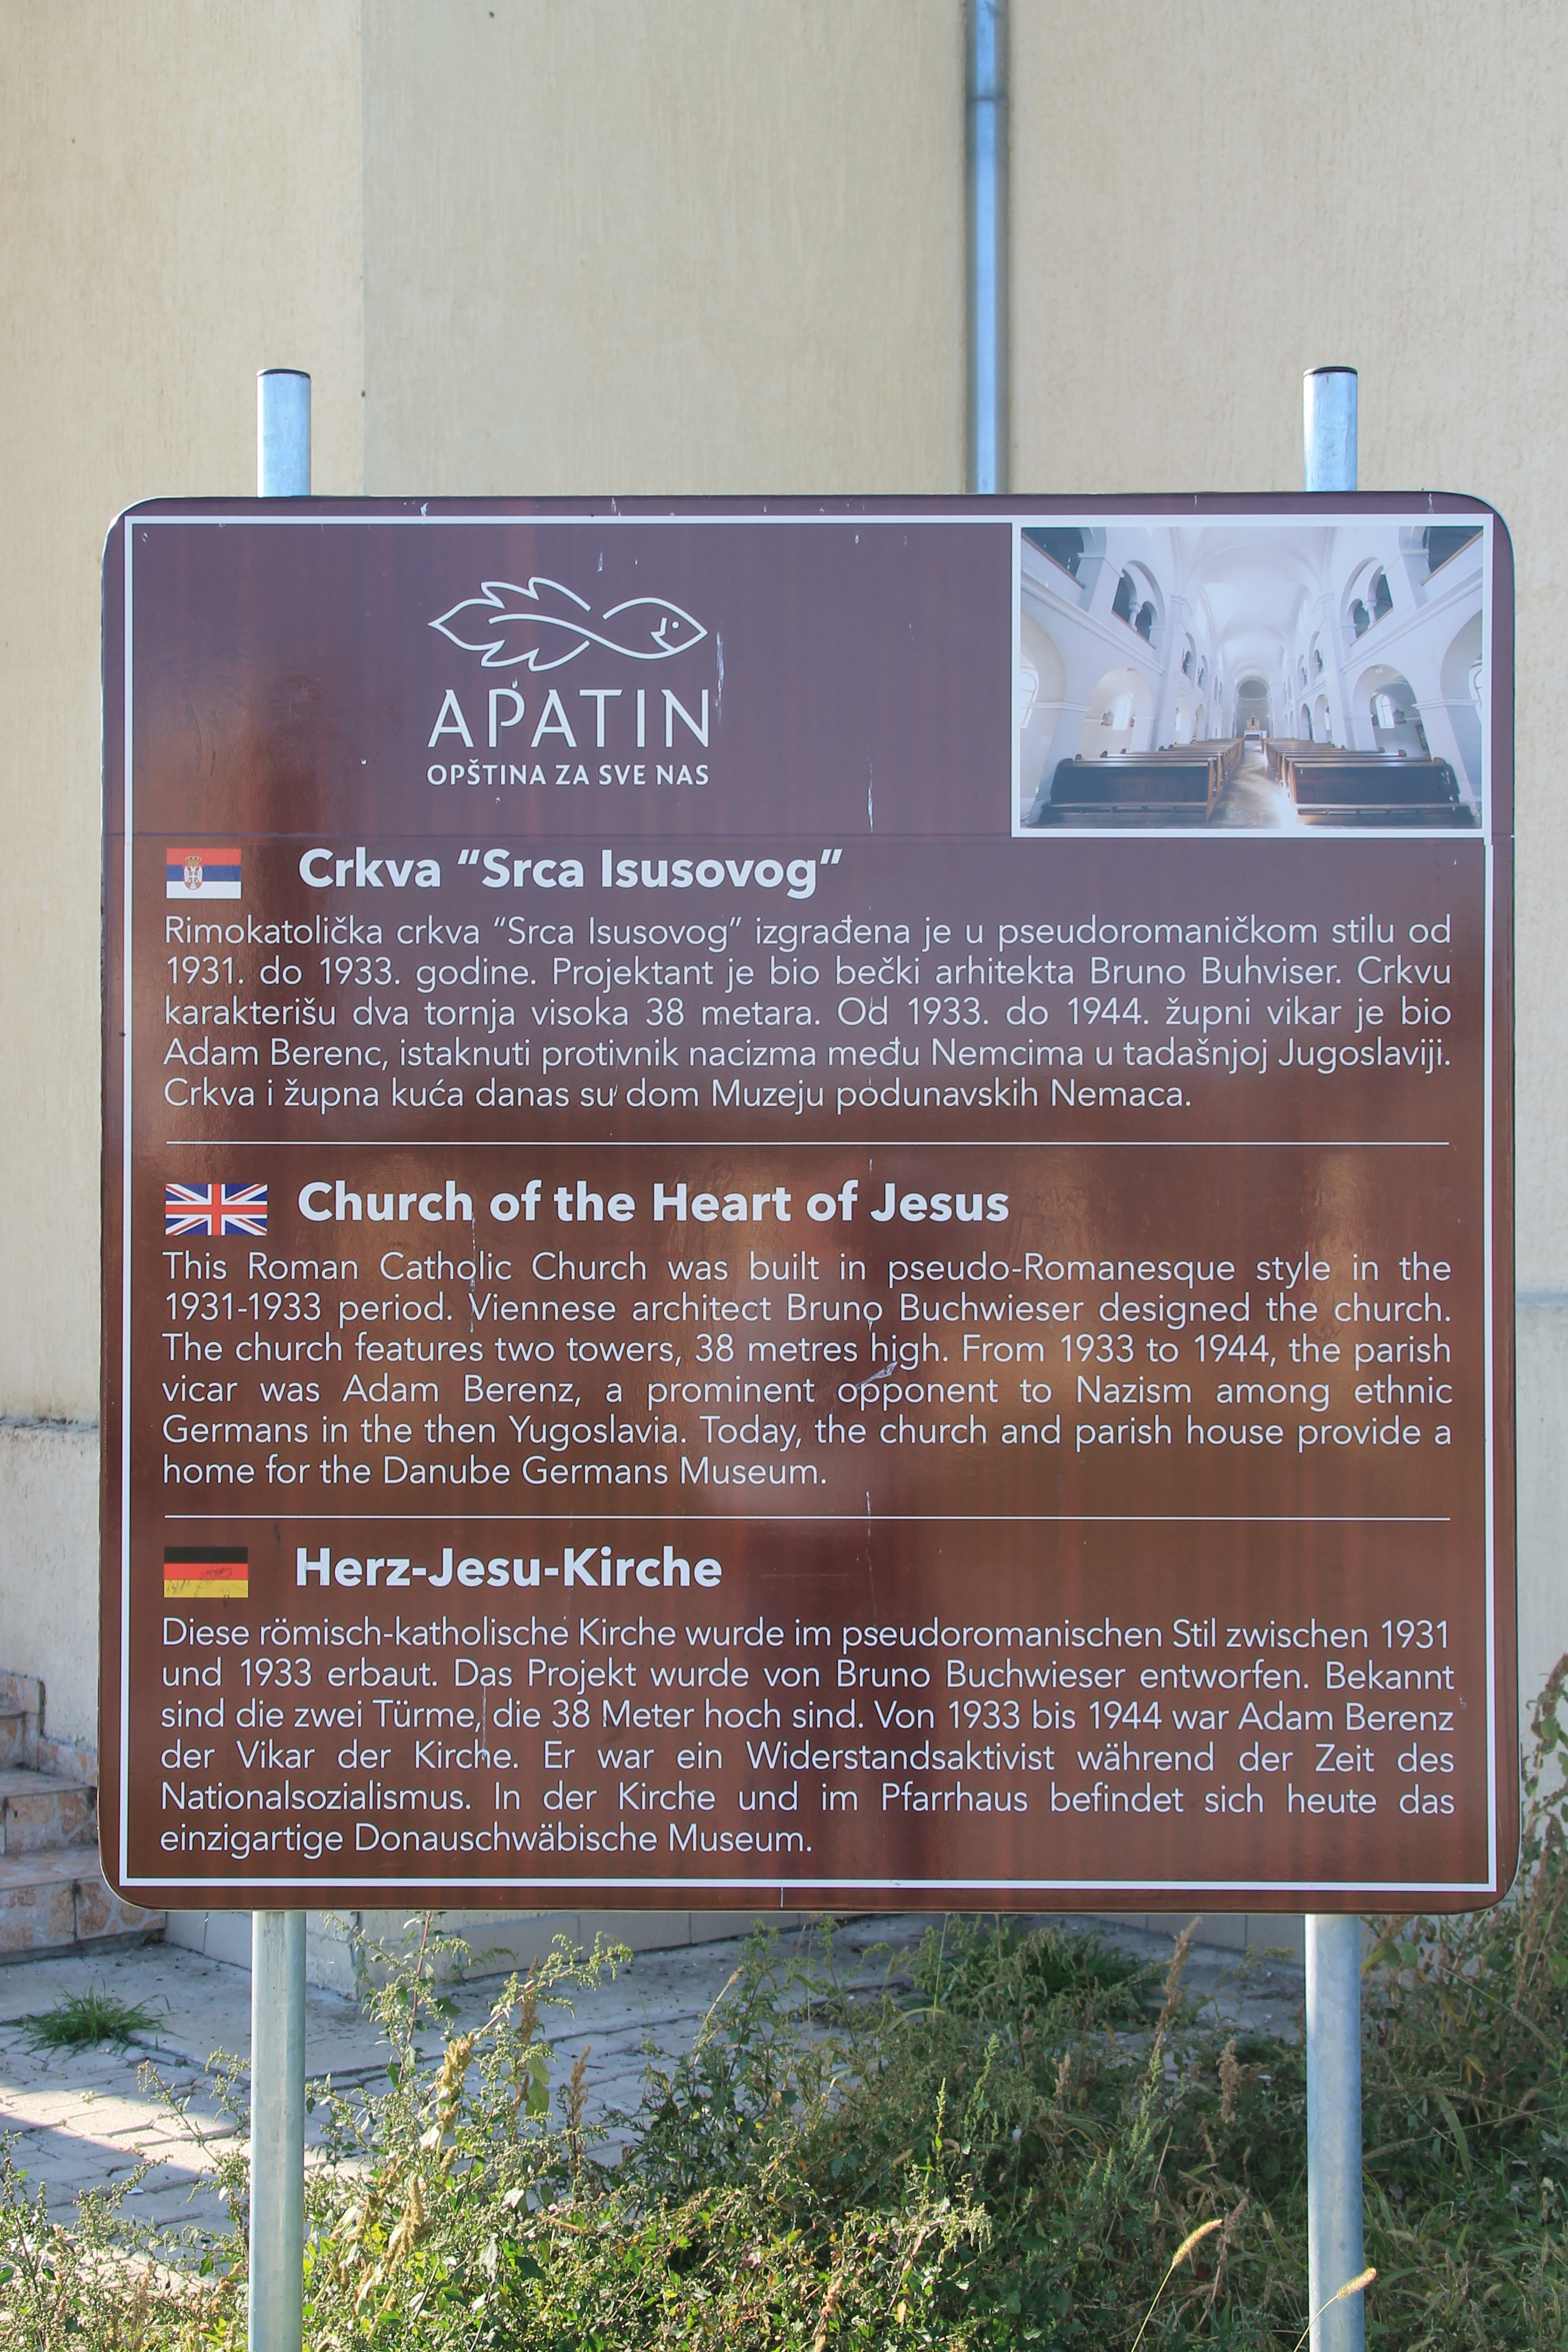 https://upload.wikimedia.org/wikipedia/commons/5/55/Wiki.Vojvodina_IX_Church_of_the_Heart_of_Jesus_%28Apatin%29_556.jpg